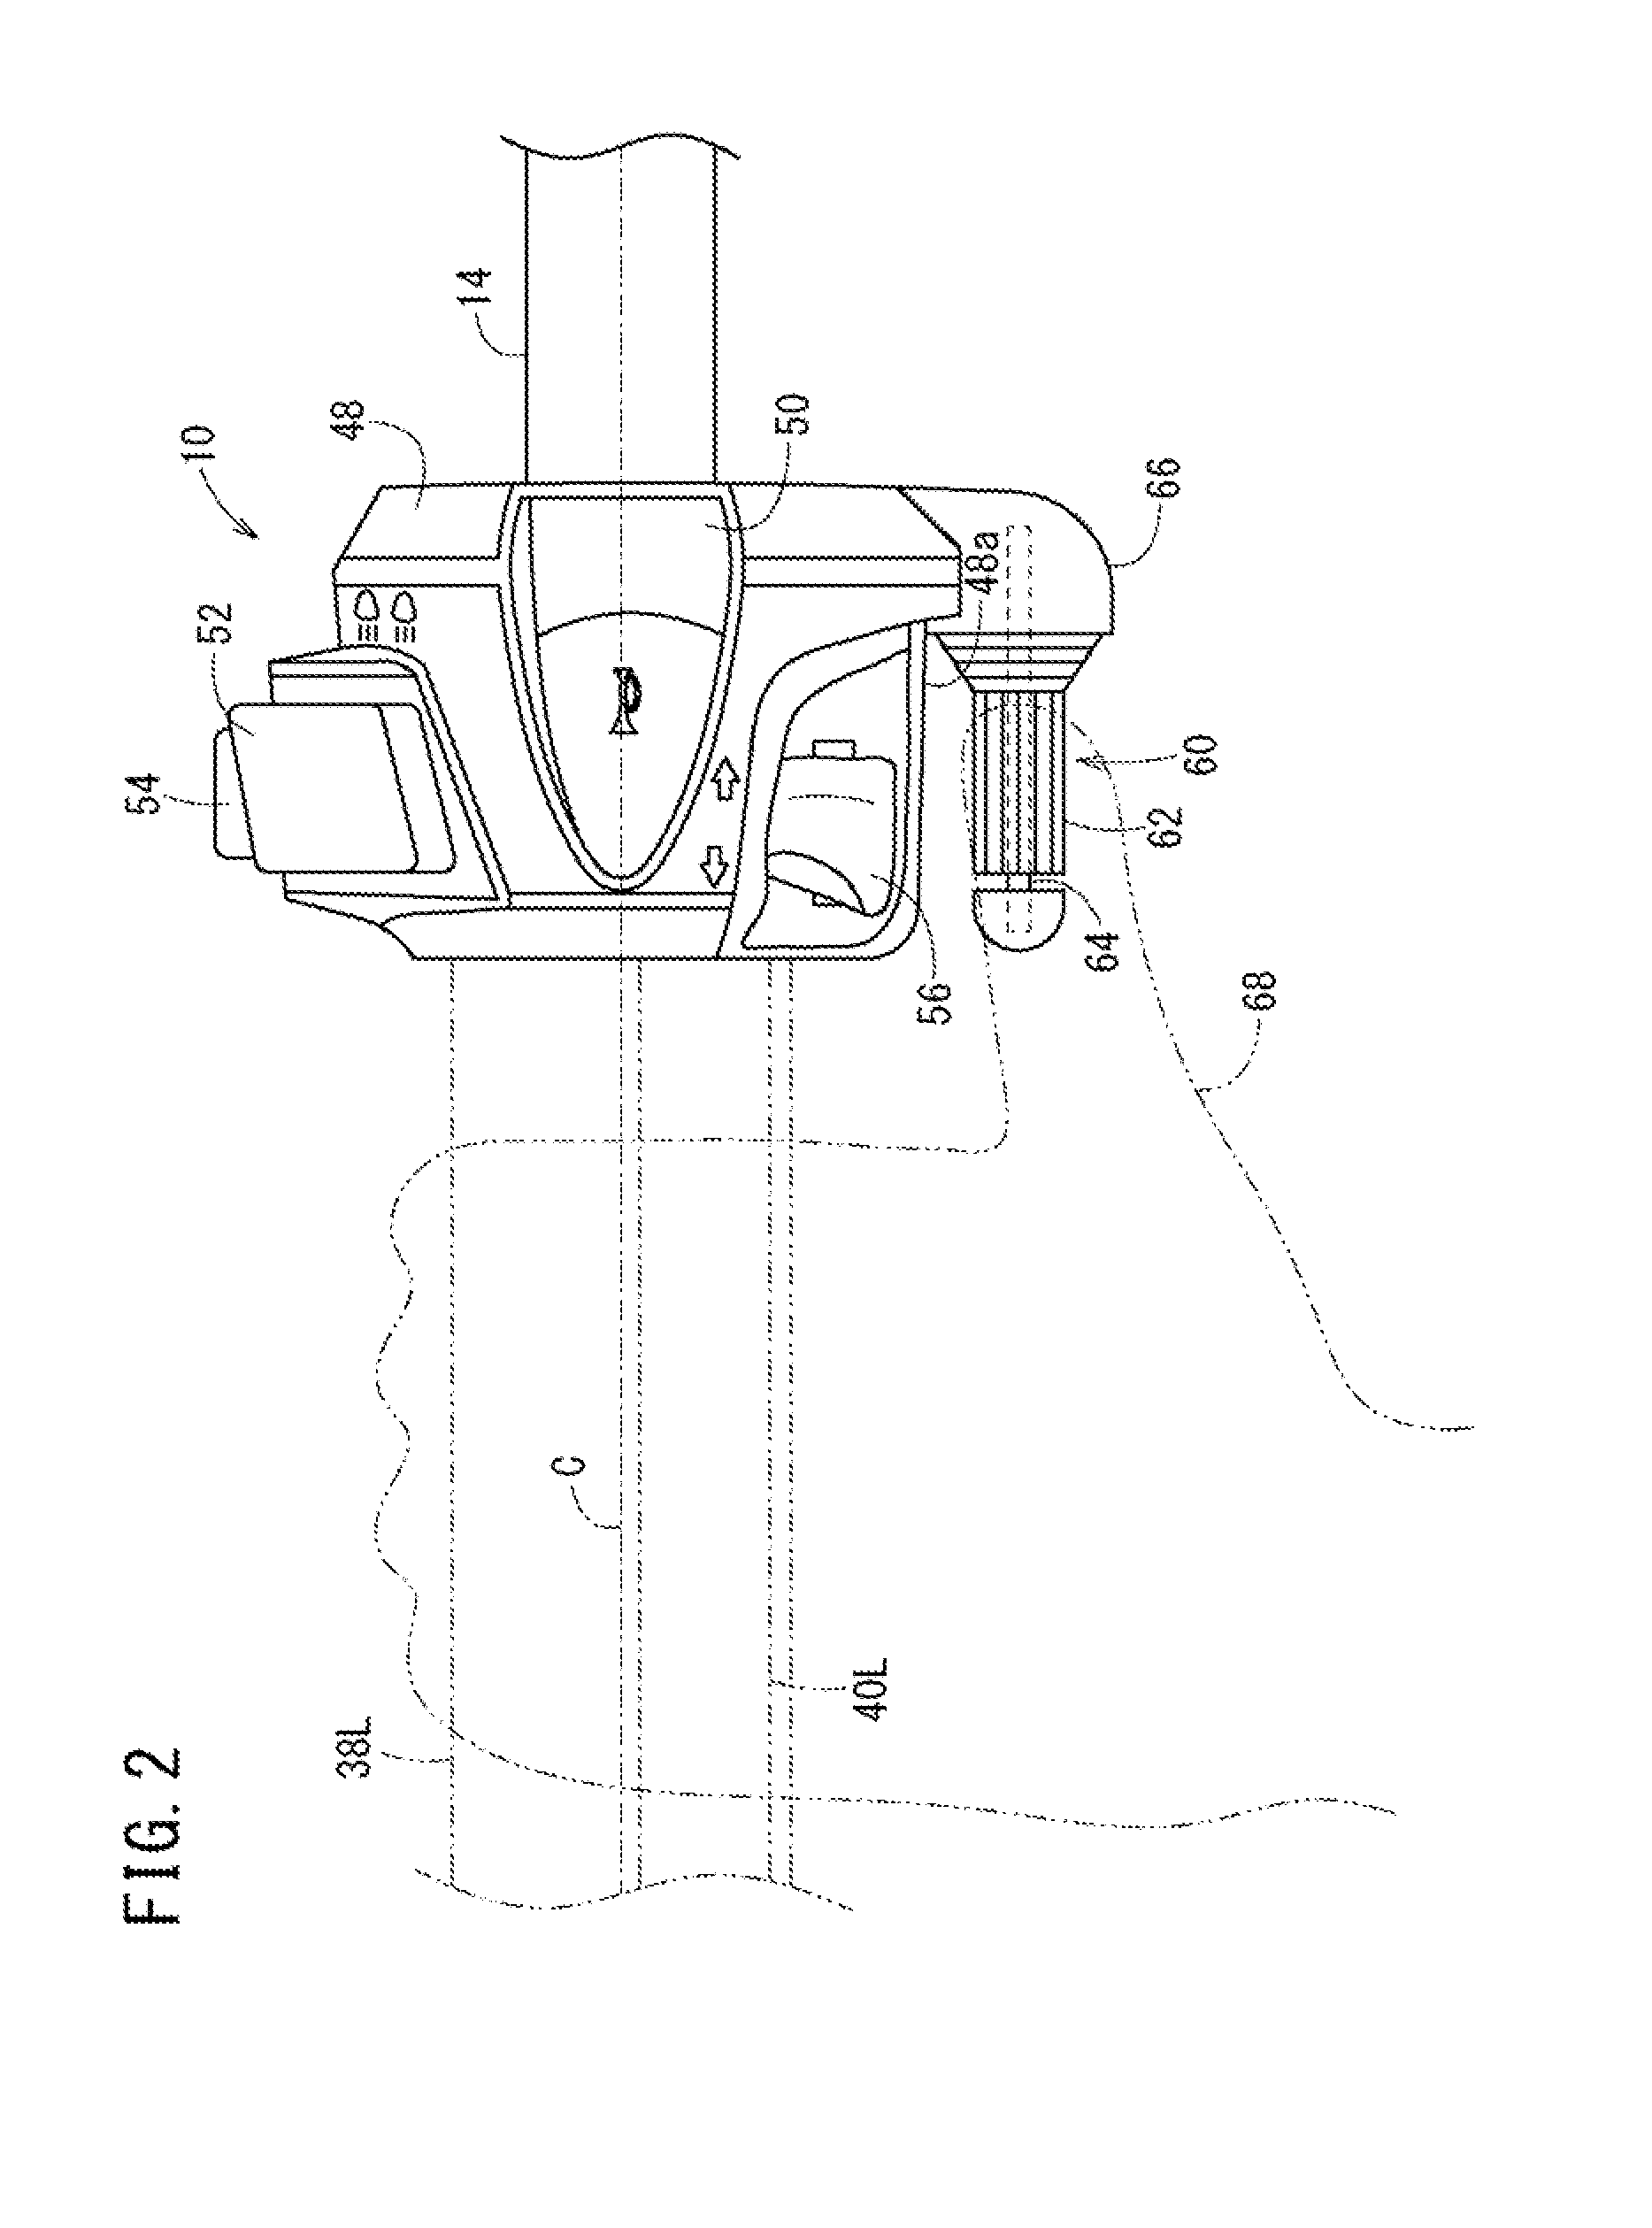 Operation device of straddle type vehicle